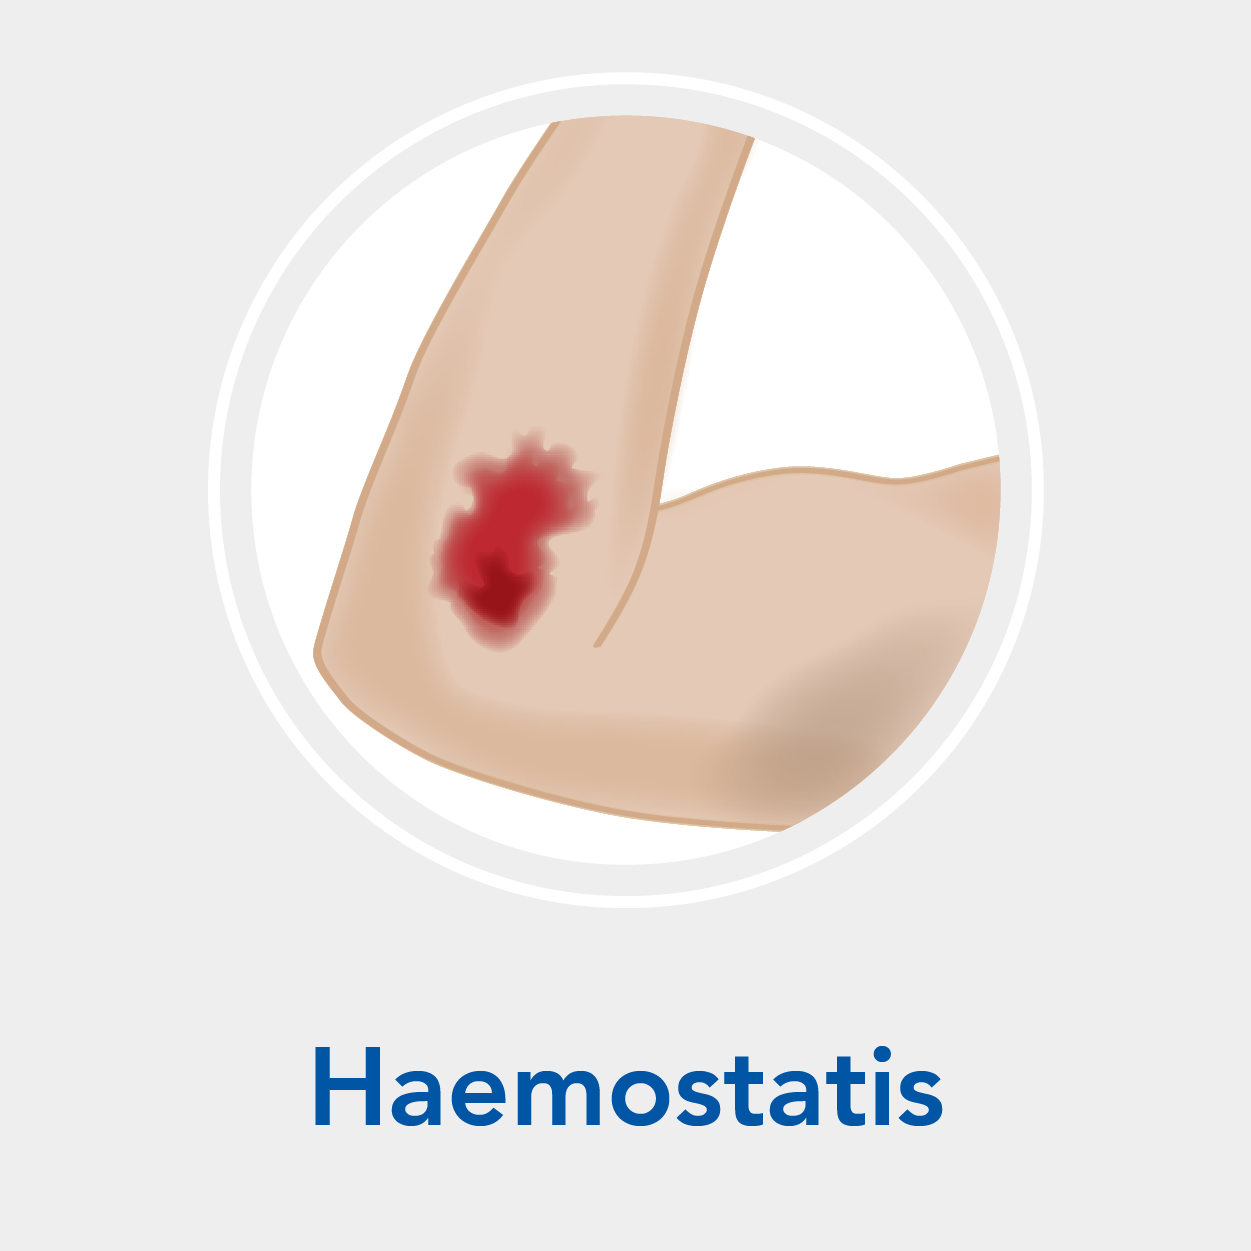 Stage 1: Haemostatis